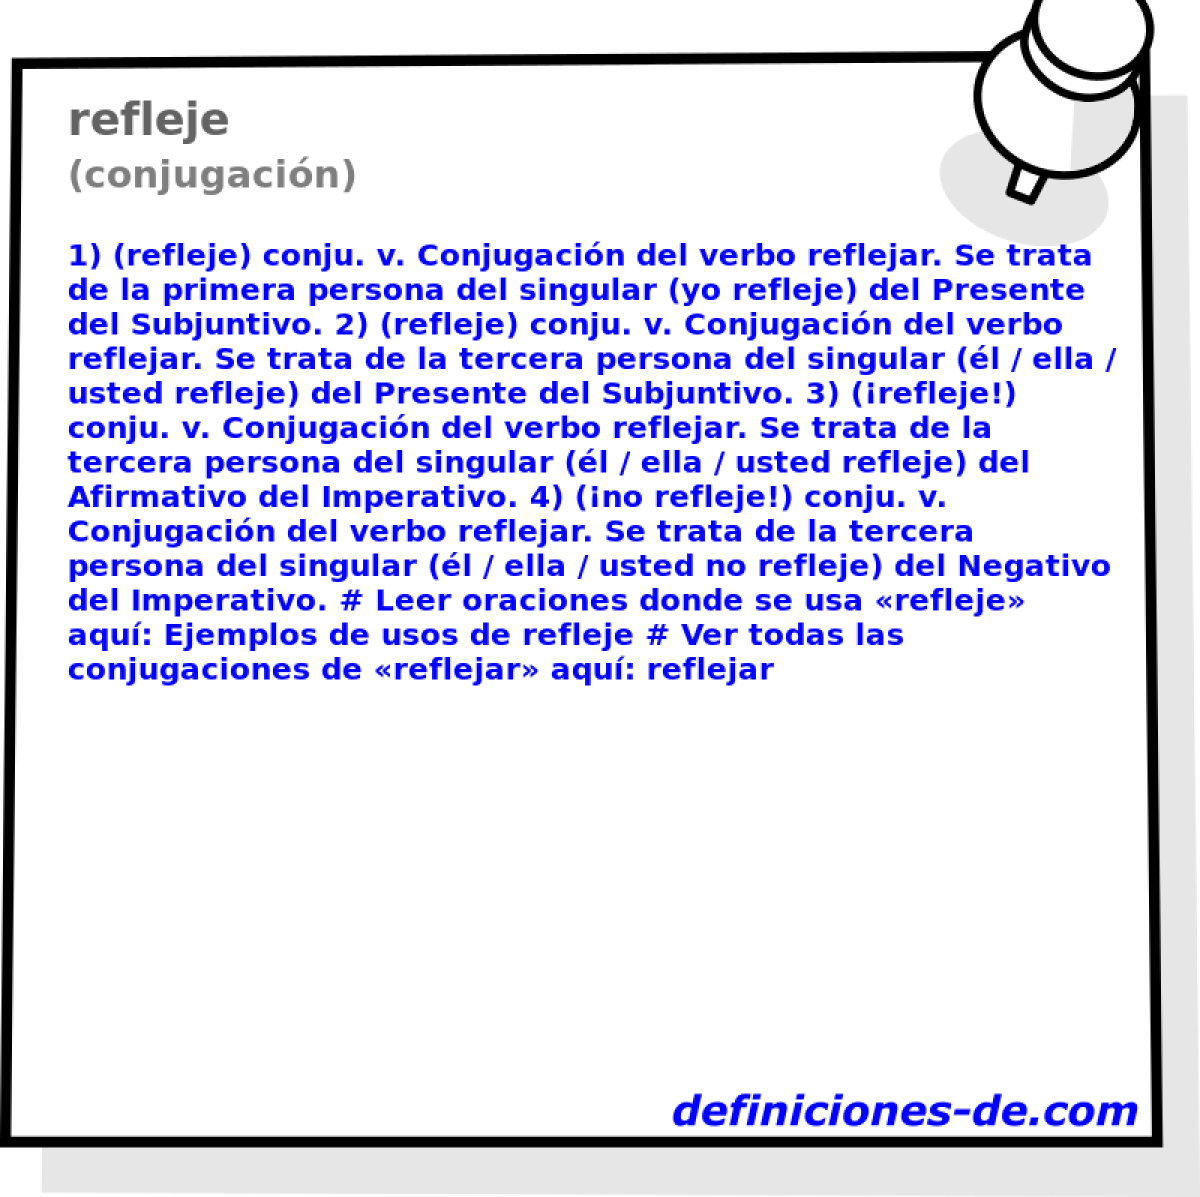 refleje (conjugacin)